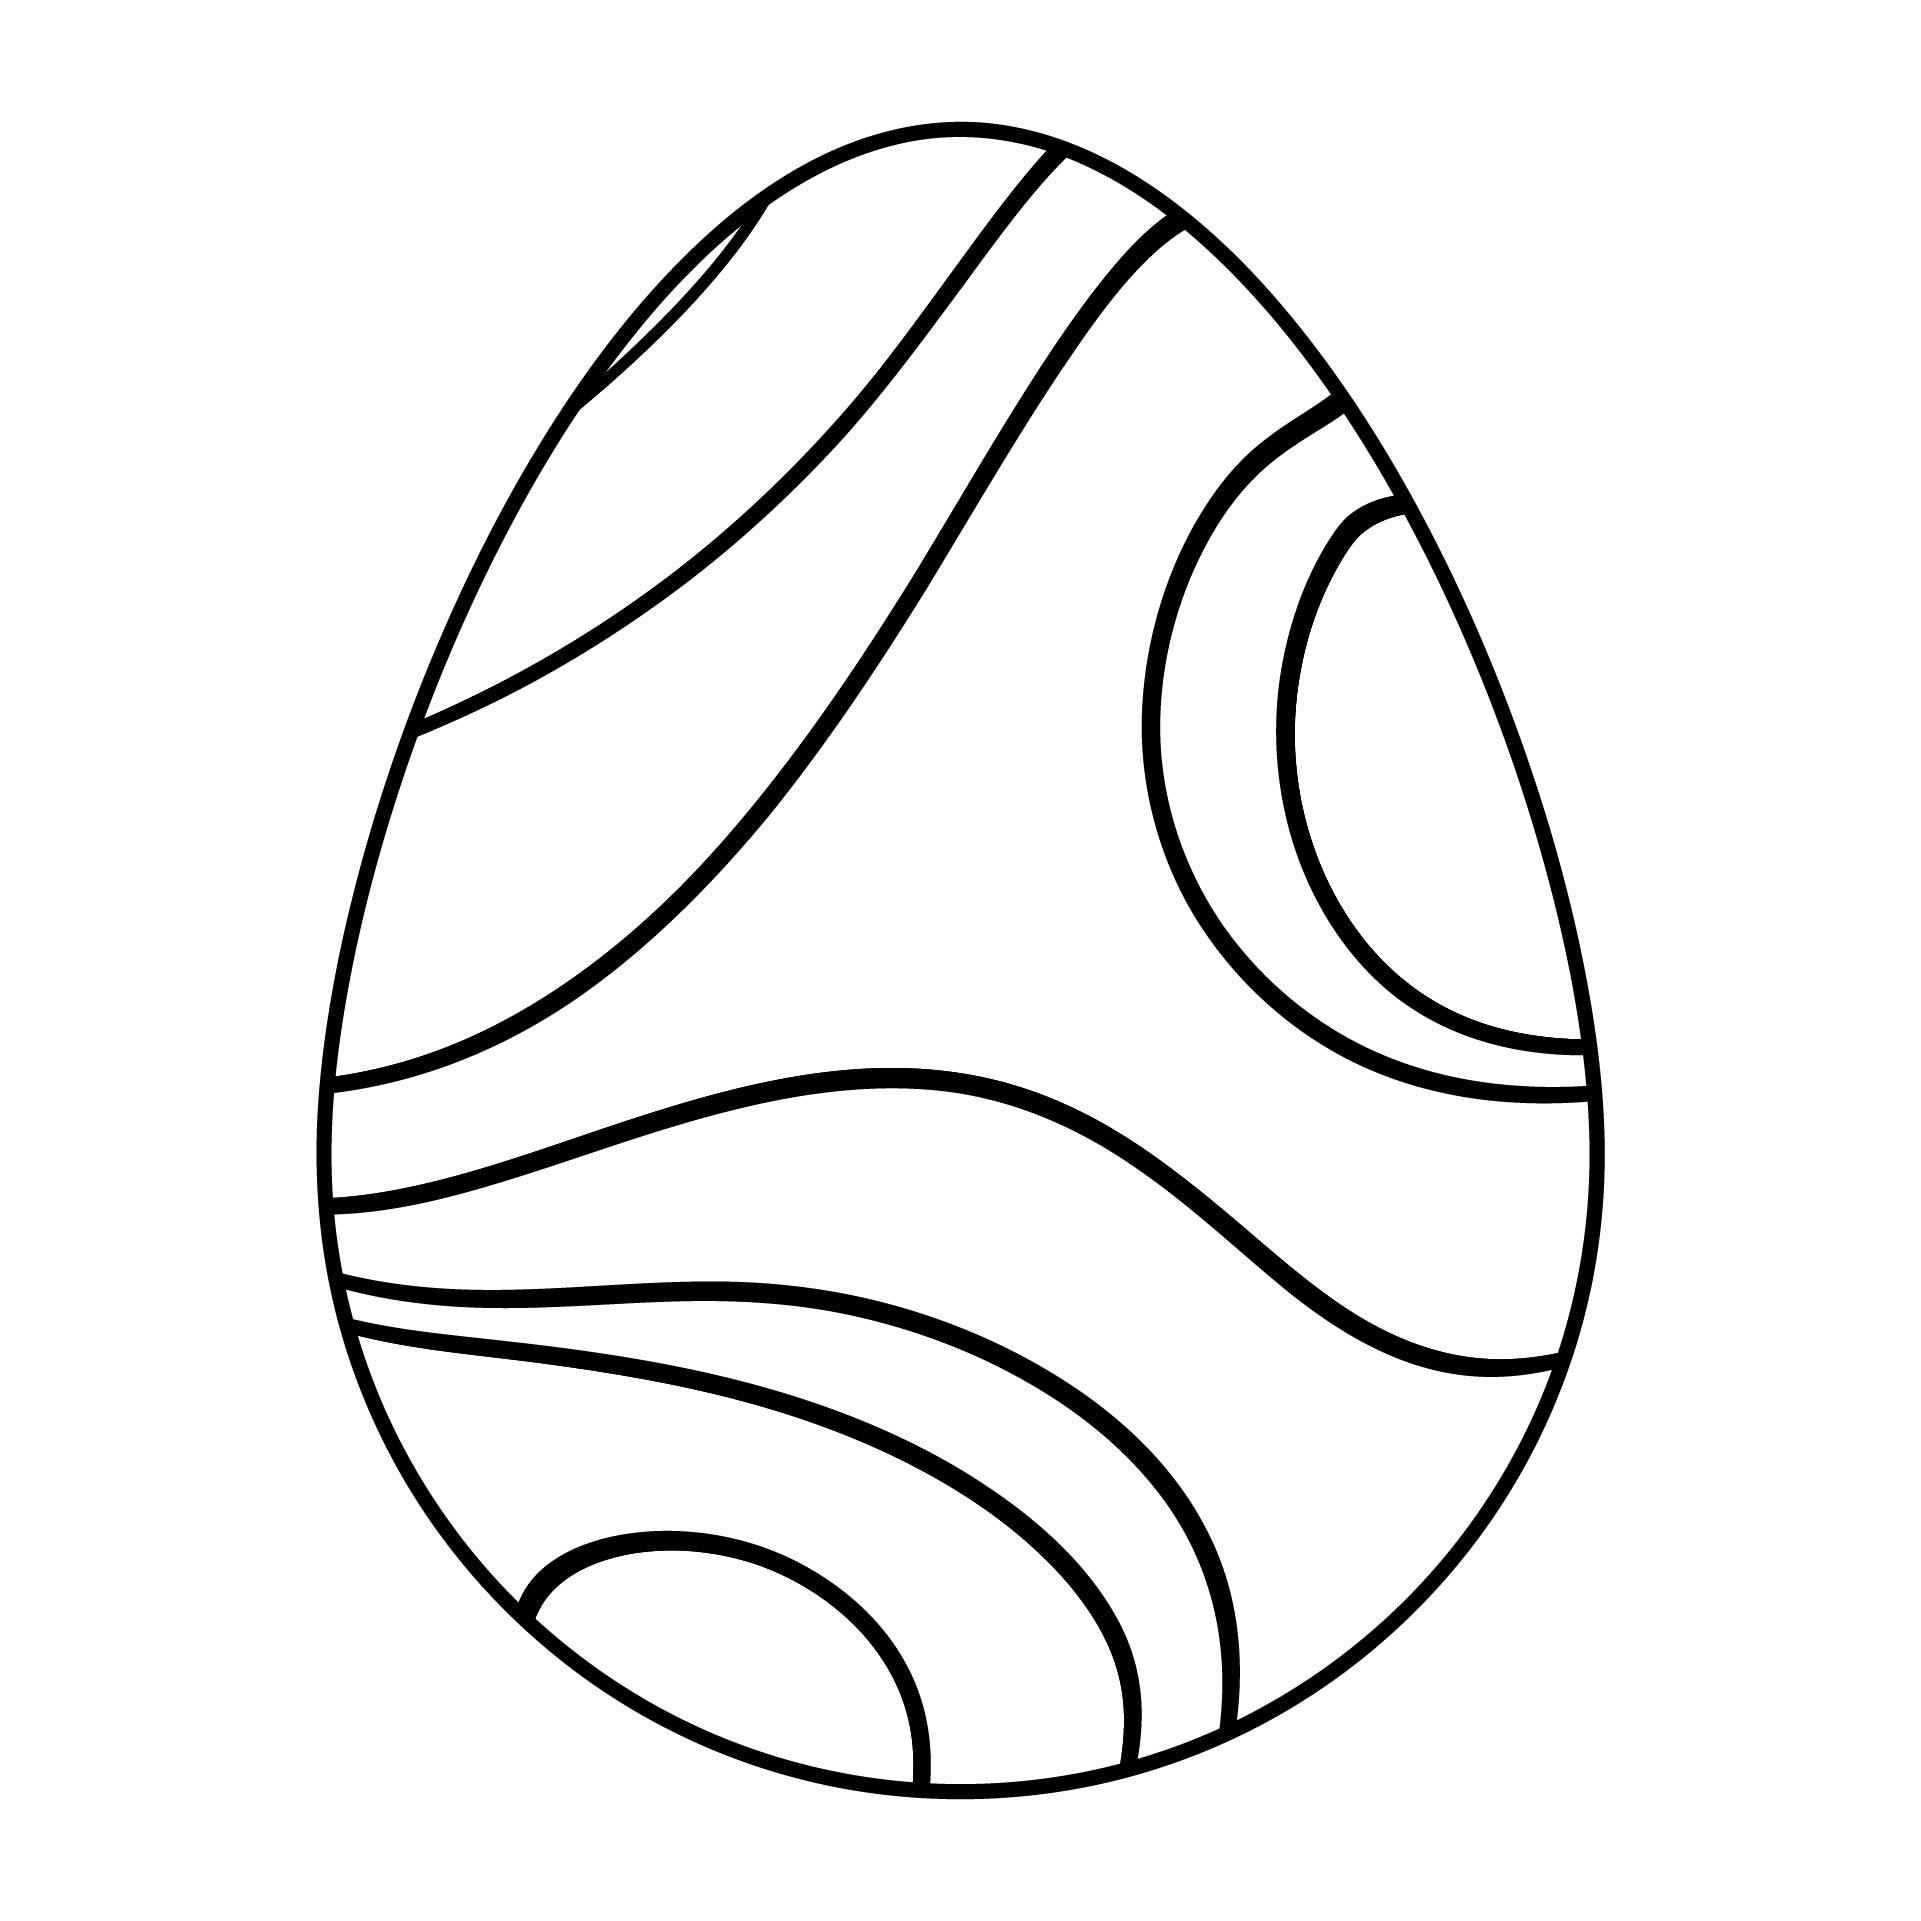 5 Best Printable Easter Egg Pattern - printablee.com